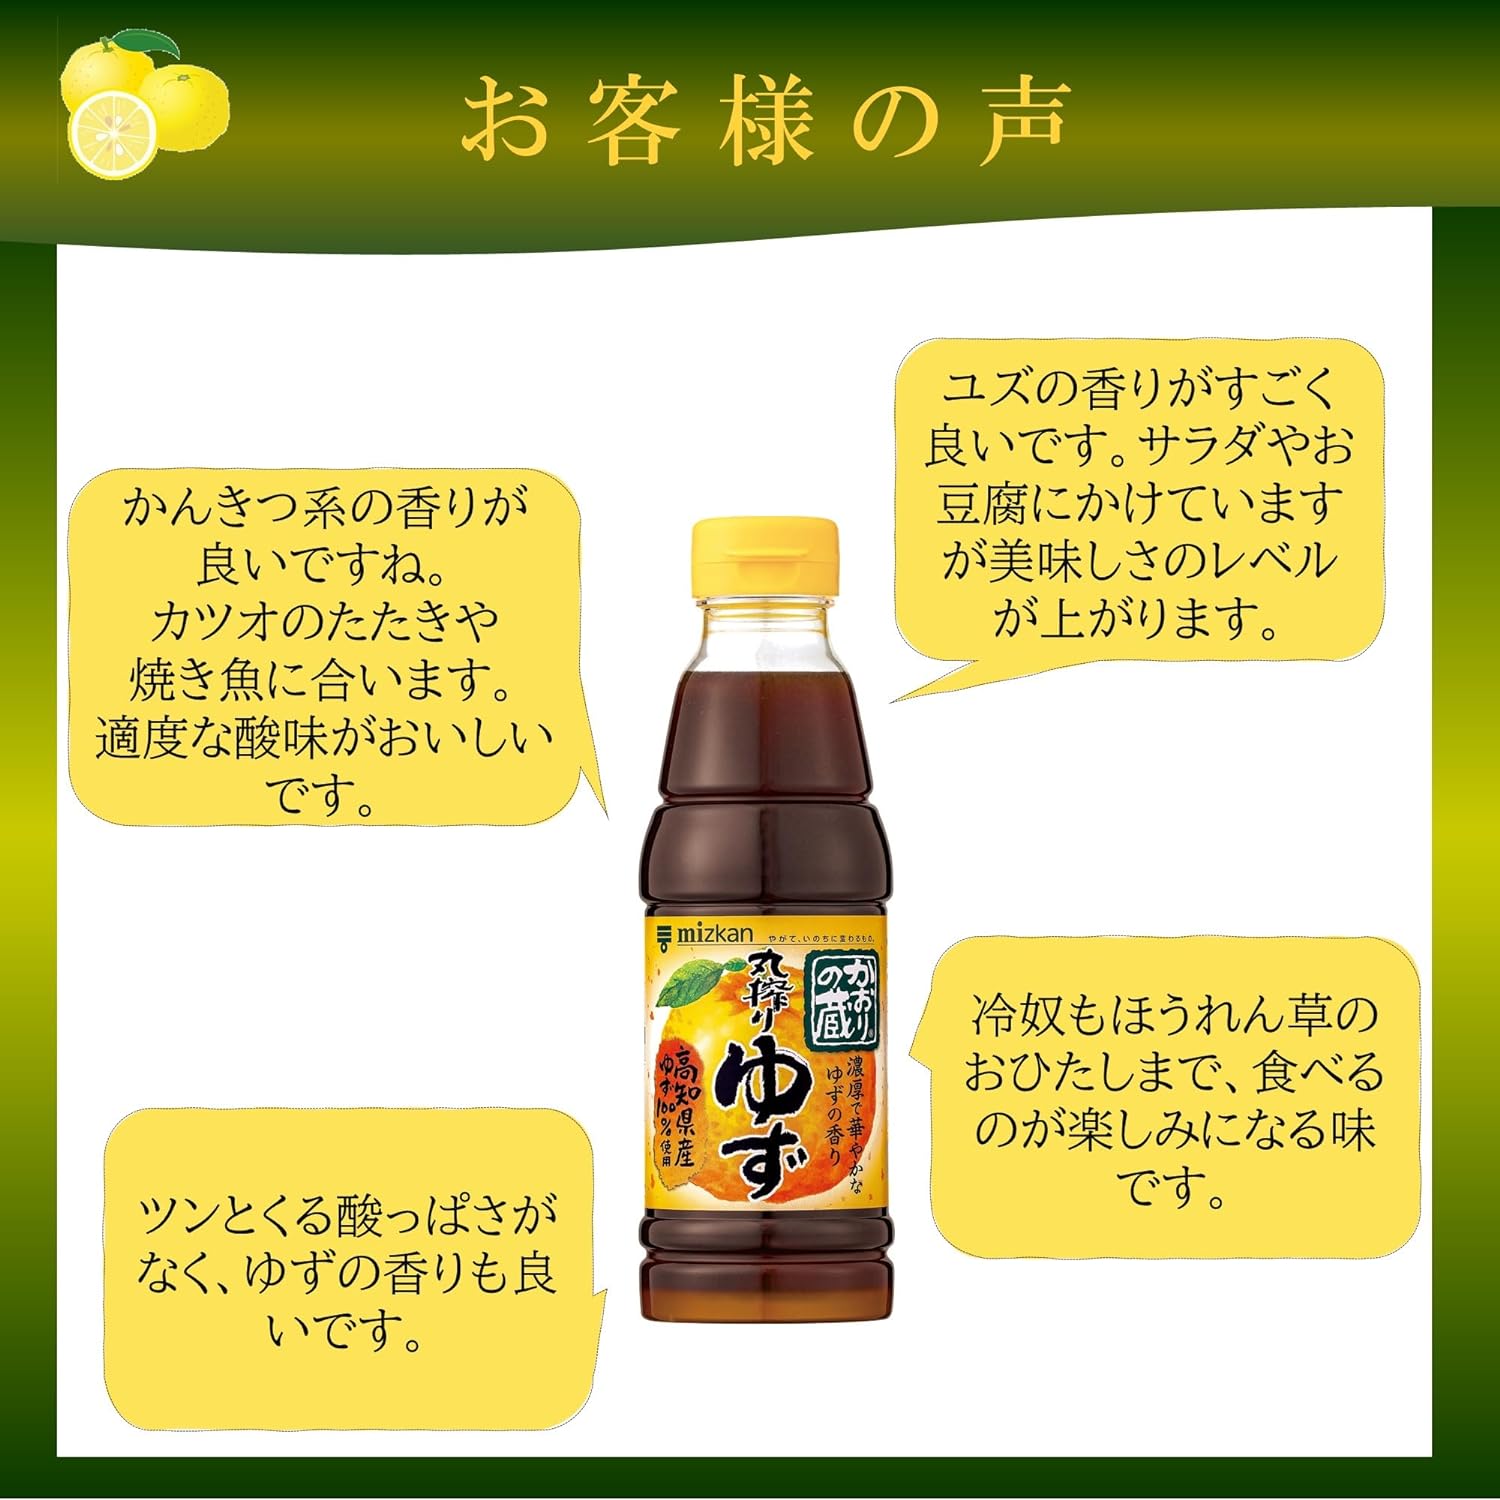 Mizkan Kaori no Kura Maru Yuzu 190ml Yuzu Ponzu Sauce | Made in 